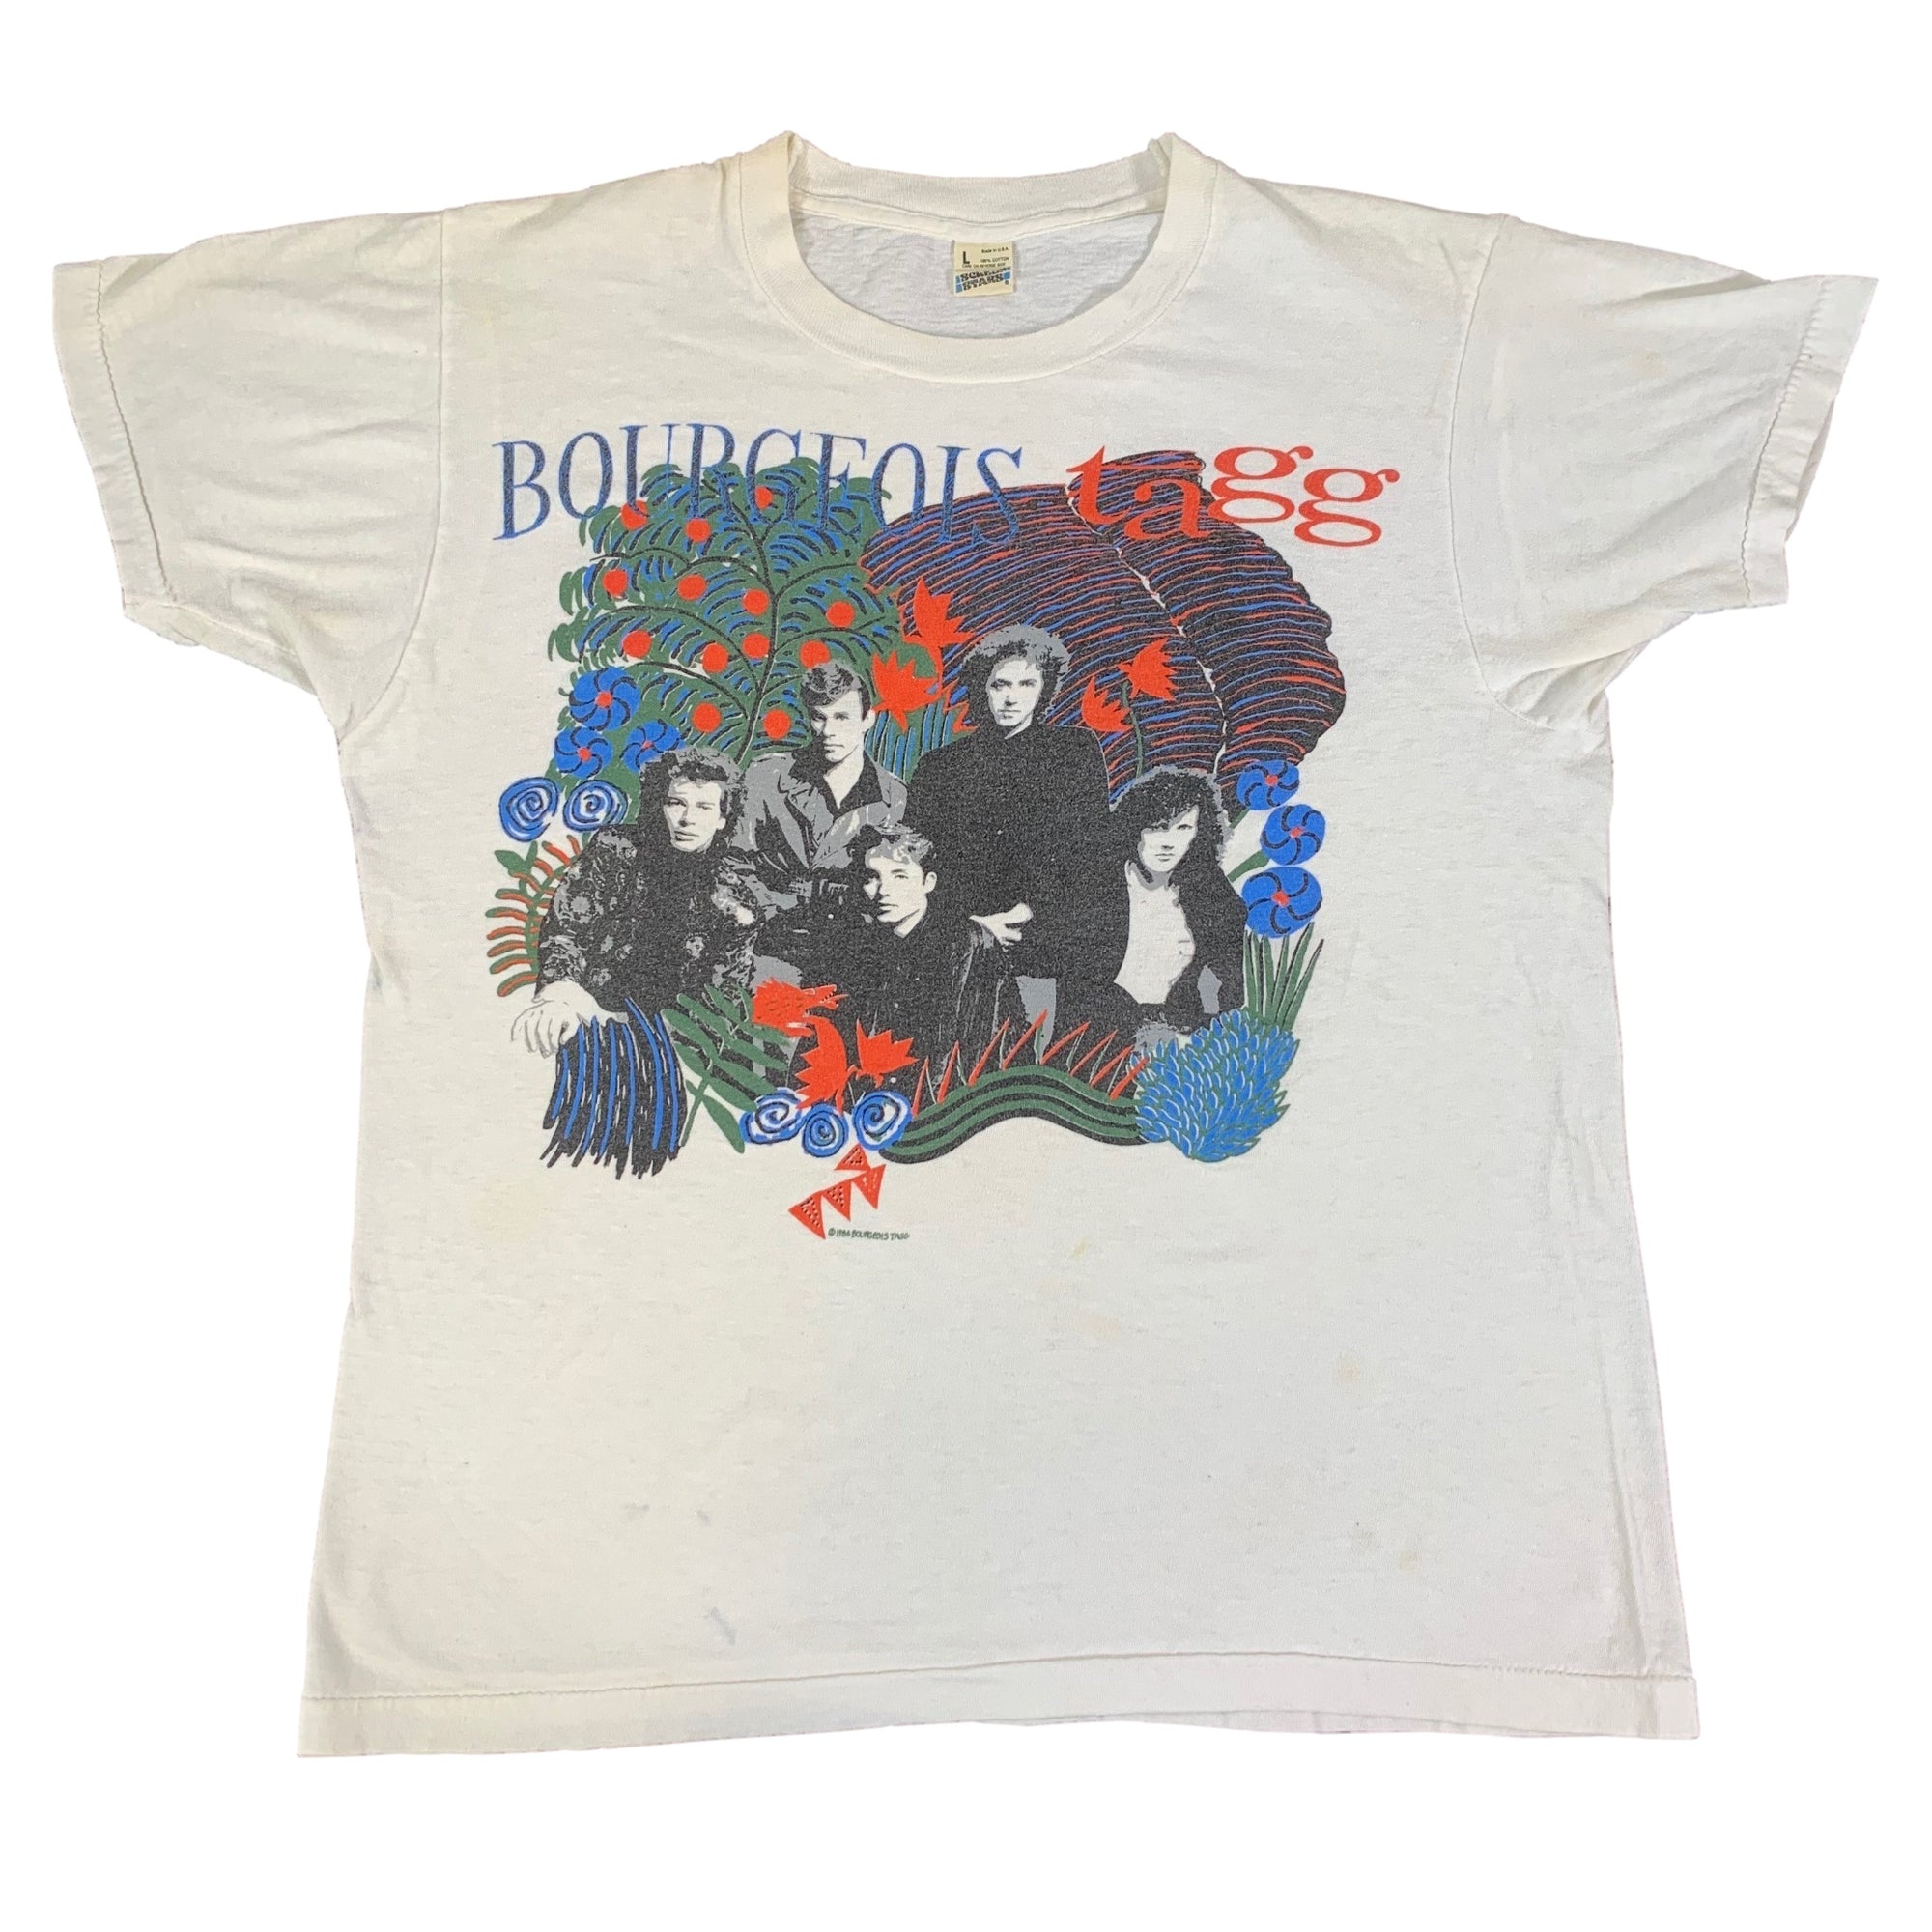 Vintage Bourgeois Tagg "NA" T-Shirt - jointcustodydc